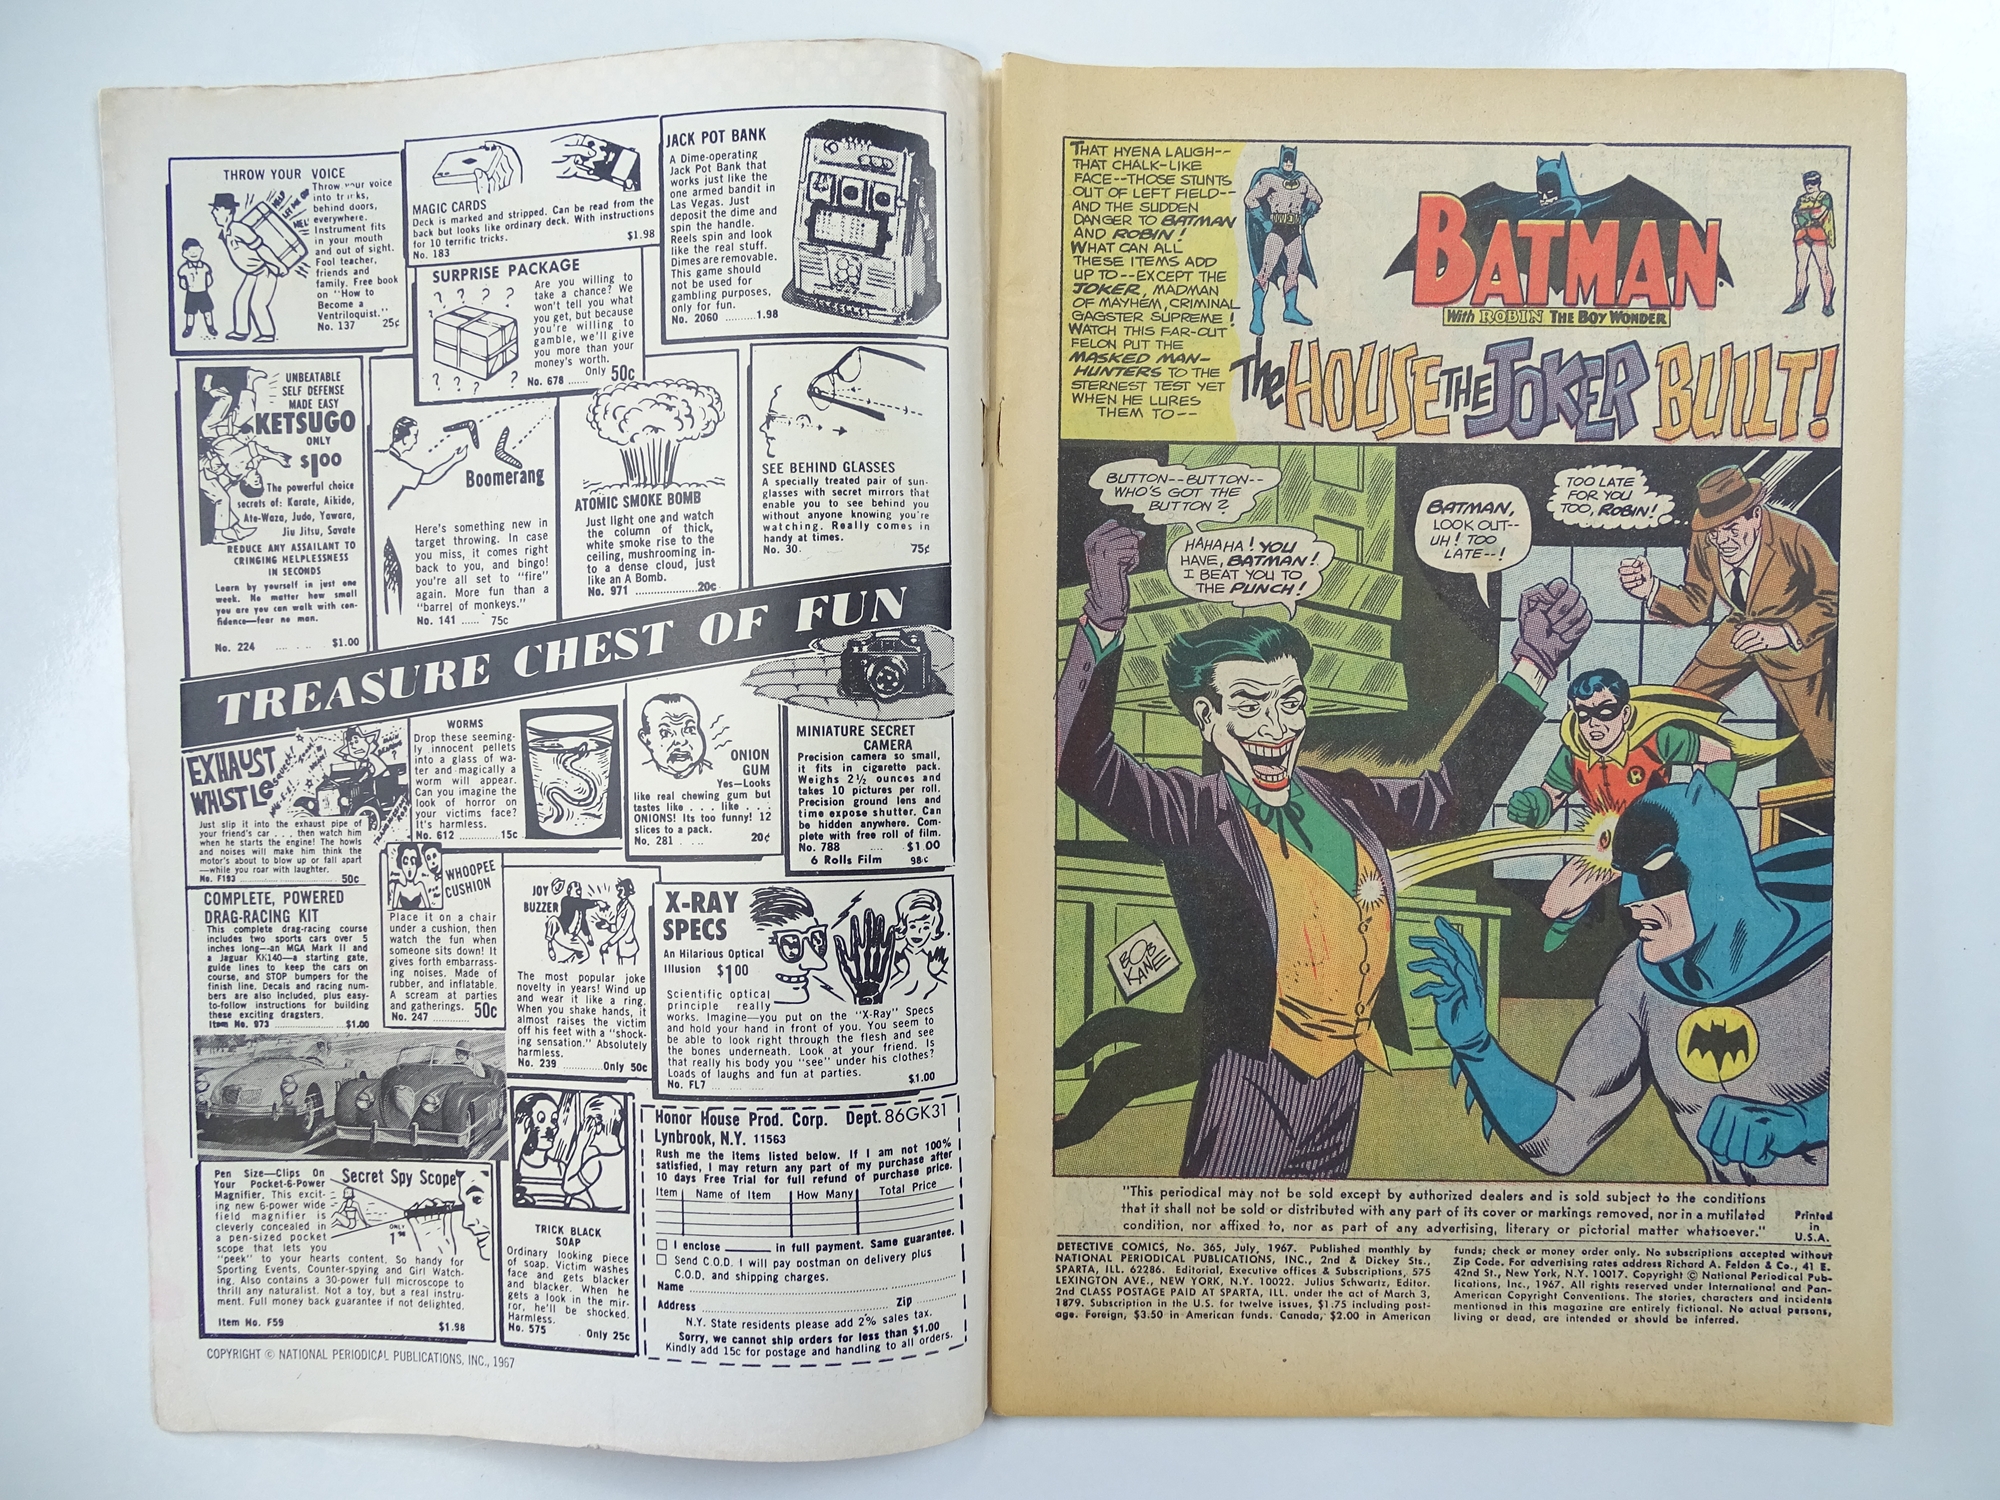 DETECTIVE COMICS: BATMAN #365 - (1967 - DC - UK Cover Price) - Joker appearance + Elongated Man back - Image 3 of 6